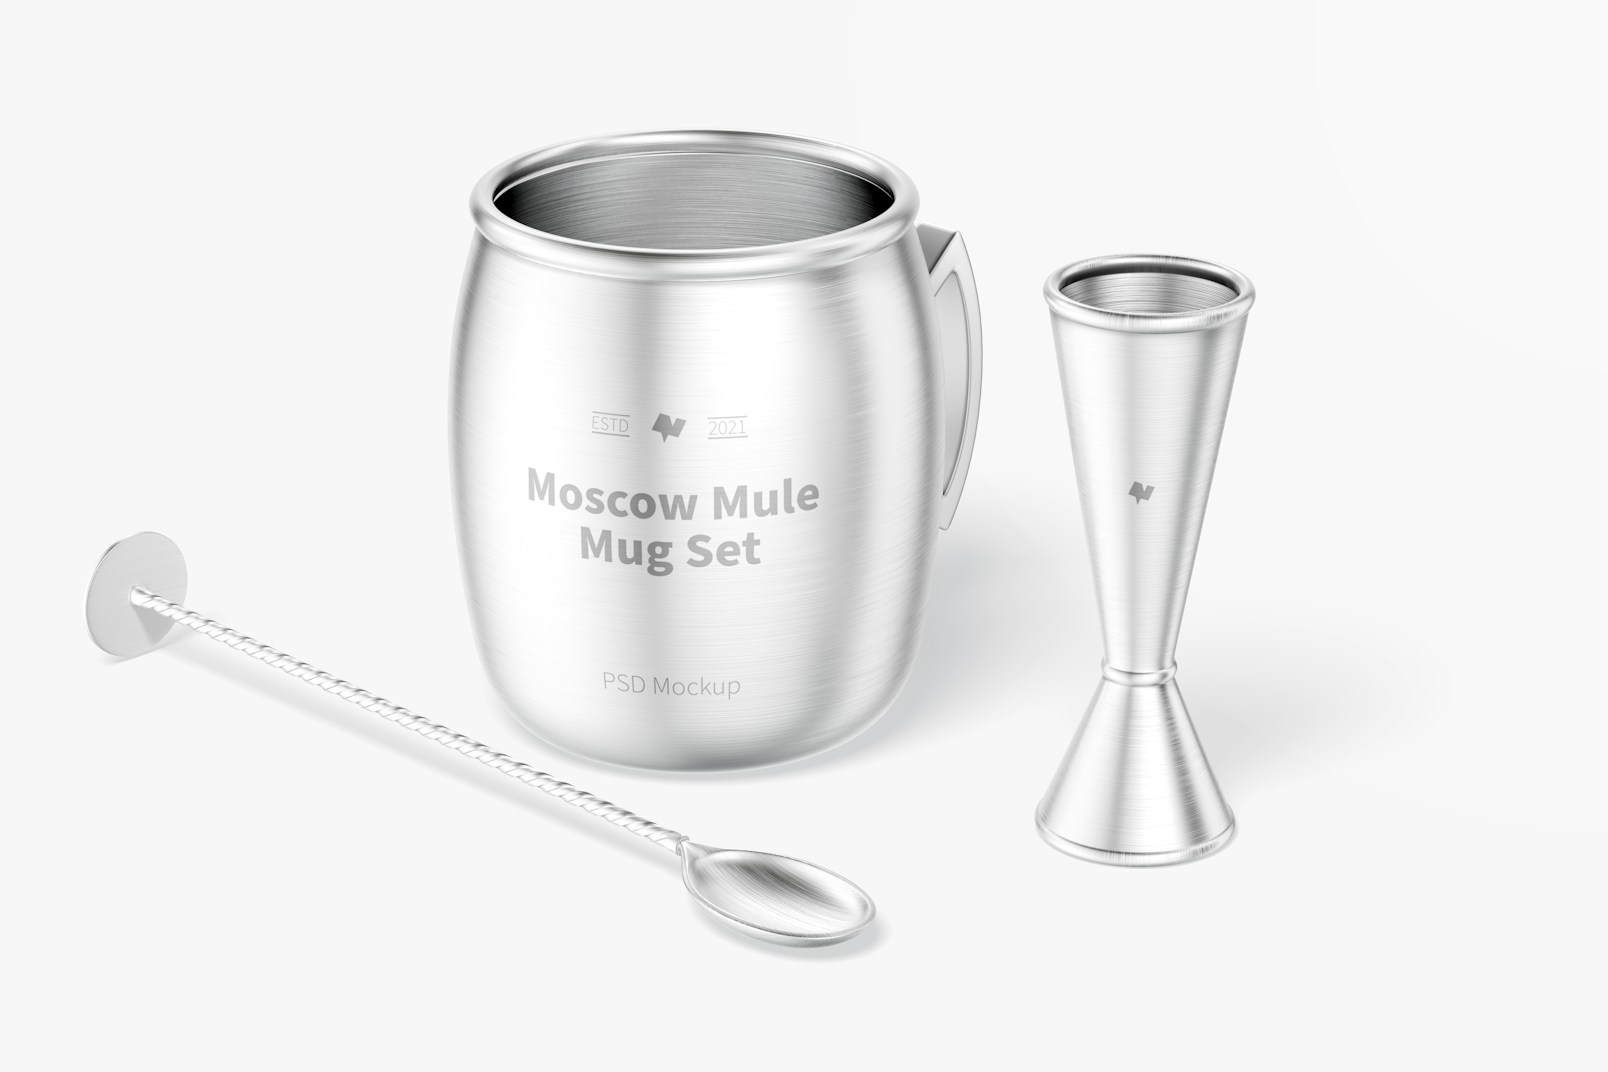 Moscow Mule Mug Set Mockup, Front View